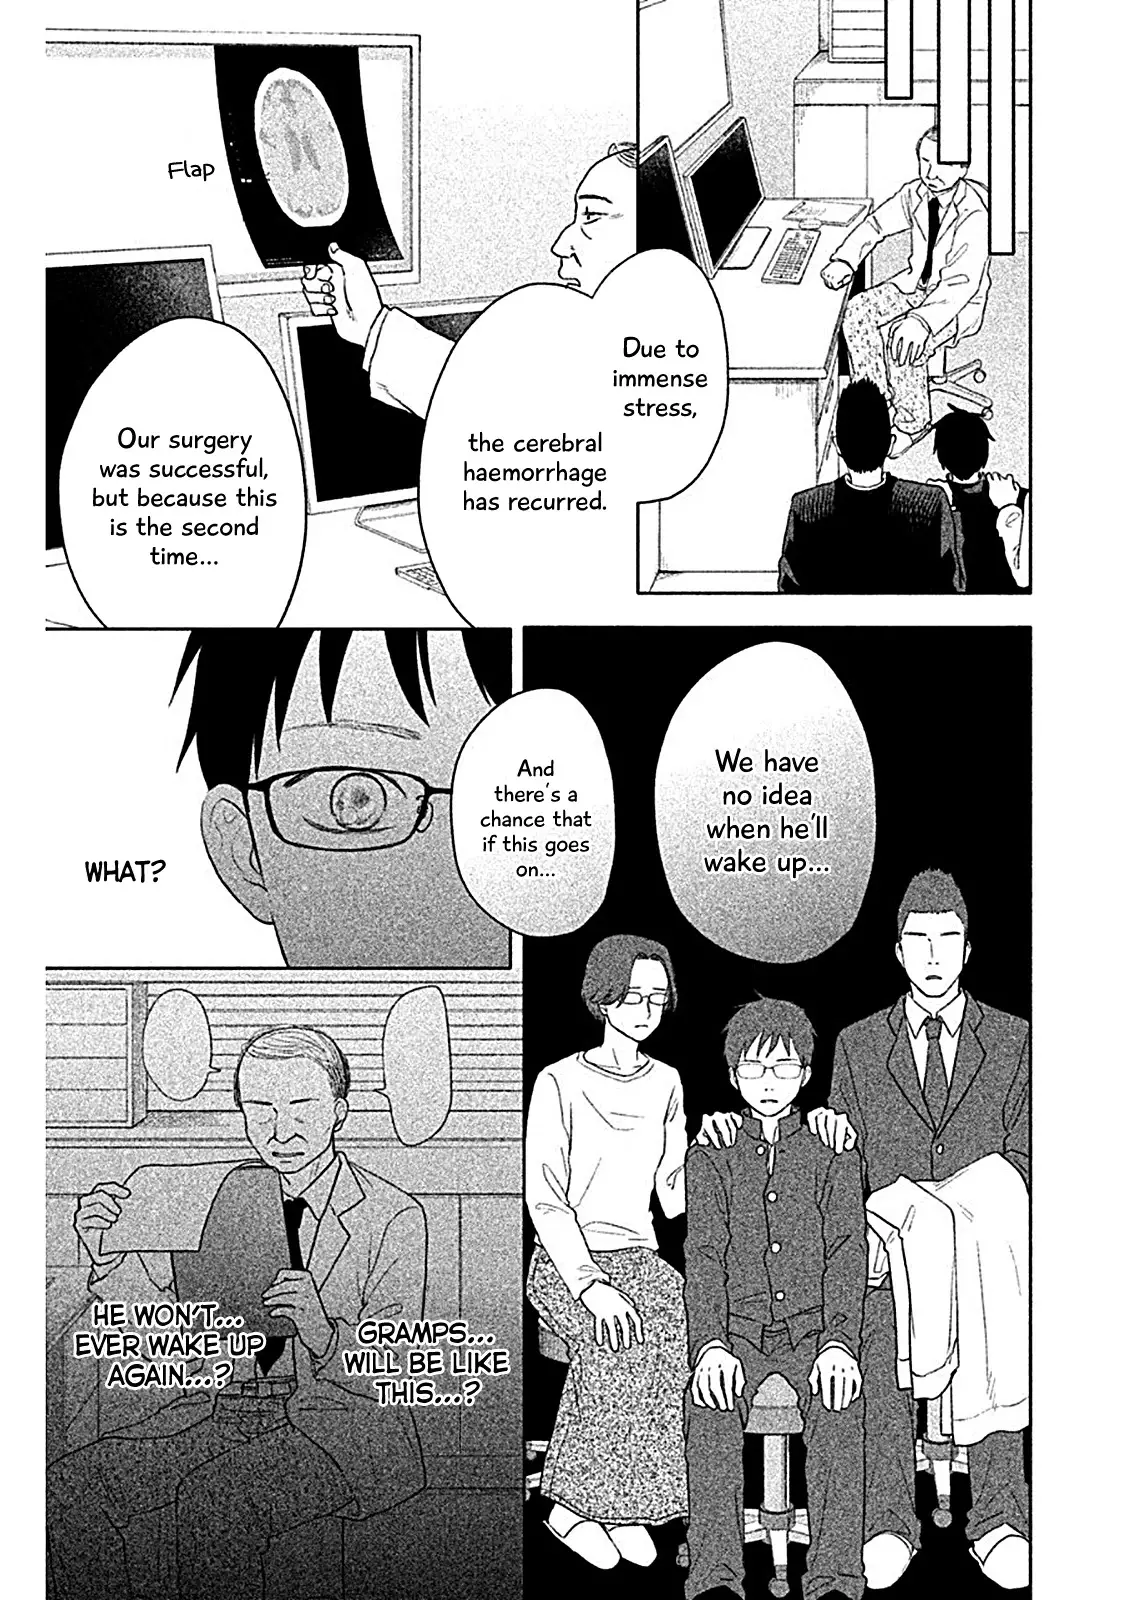 Chihayafuru: Middle School Arc - 7 page 21